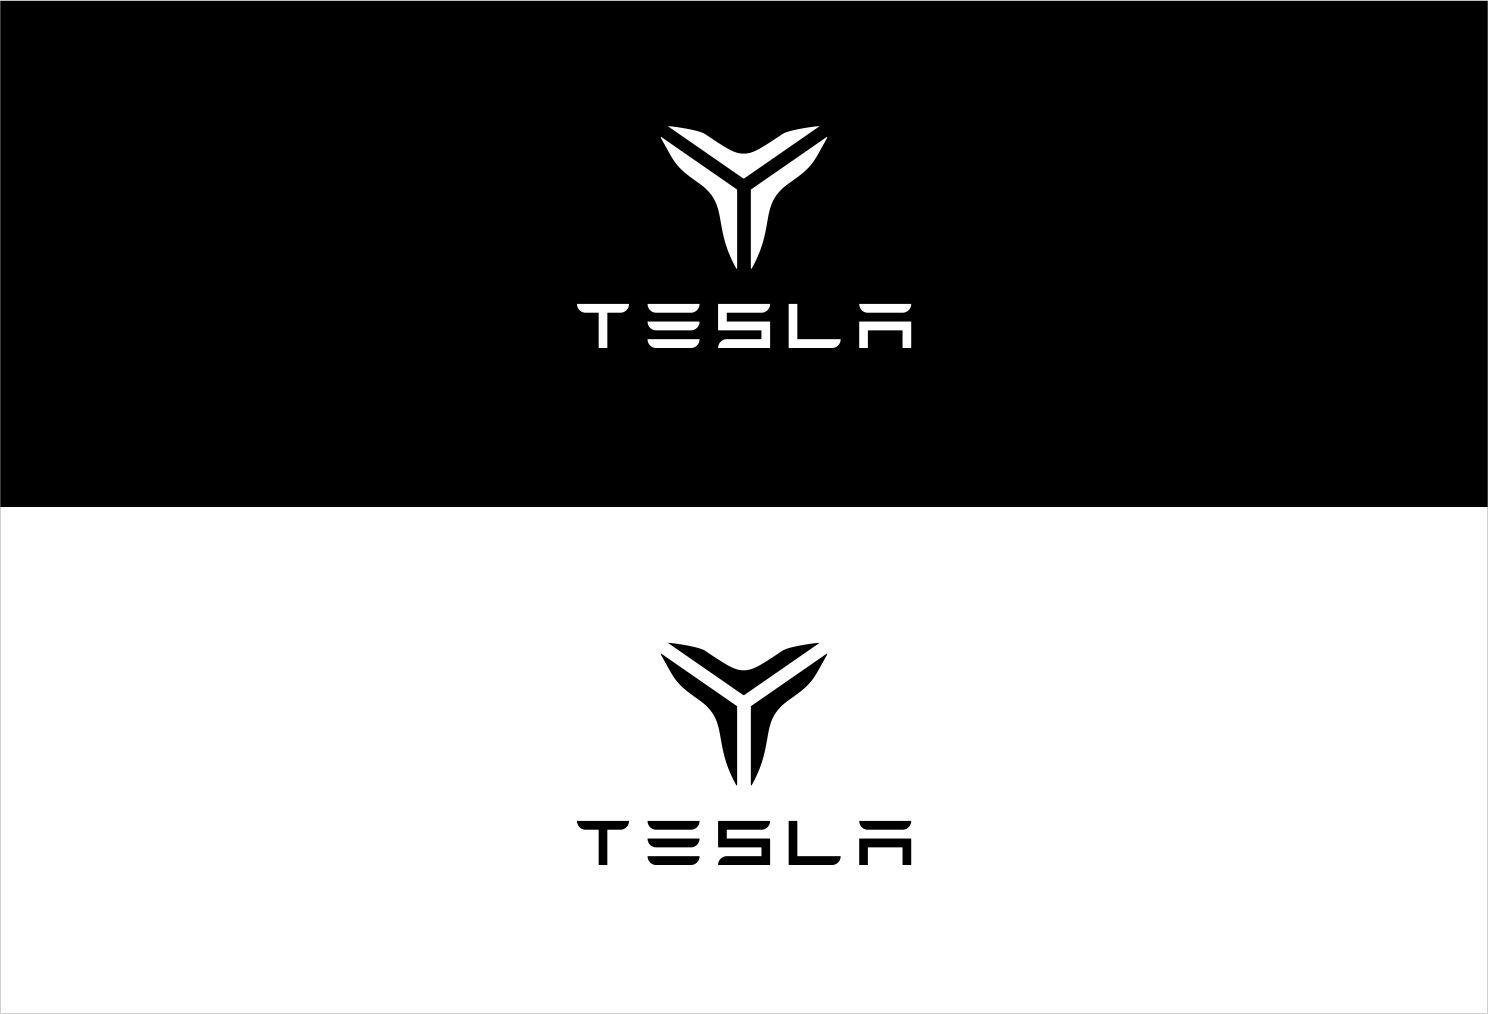 Tesla Business Logo - Modern, Professional, Business Logo Design for Tesla by noeazhuri ...